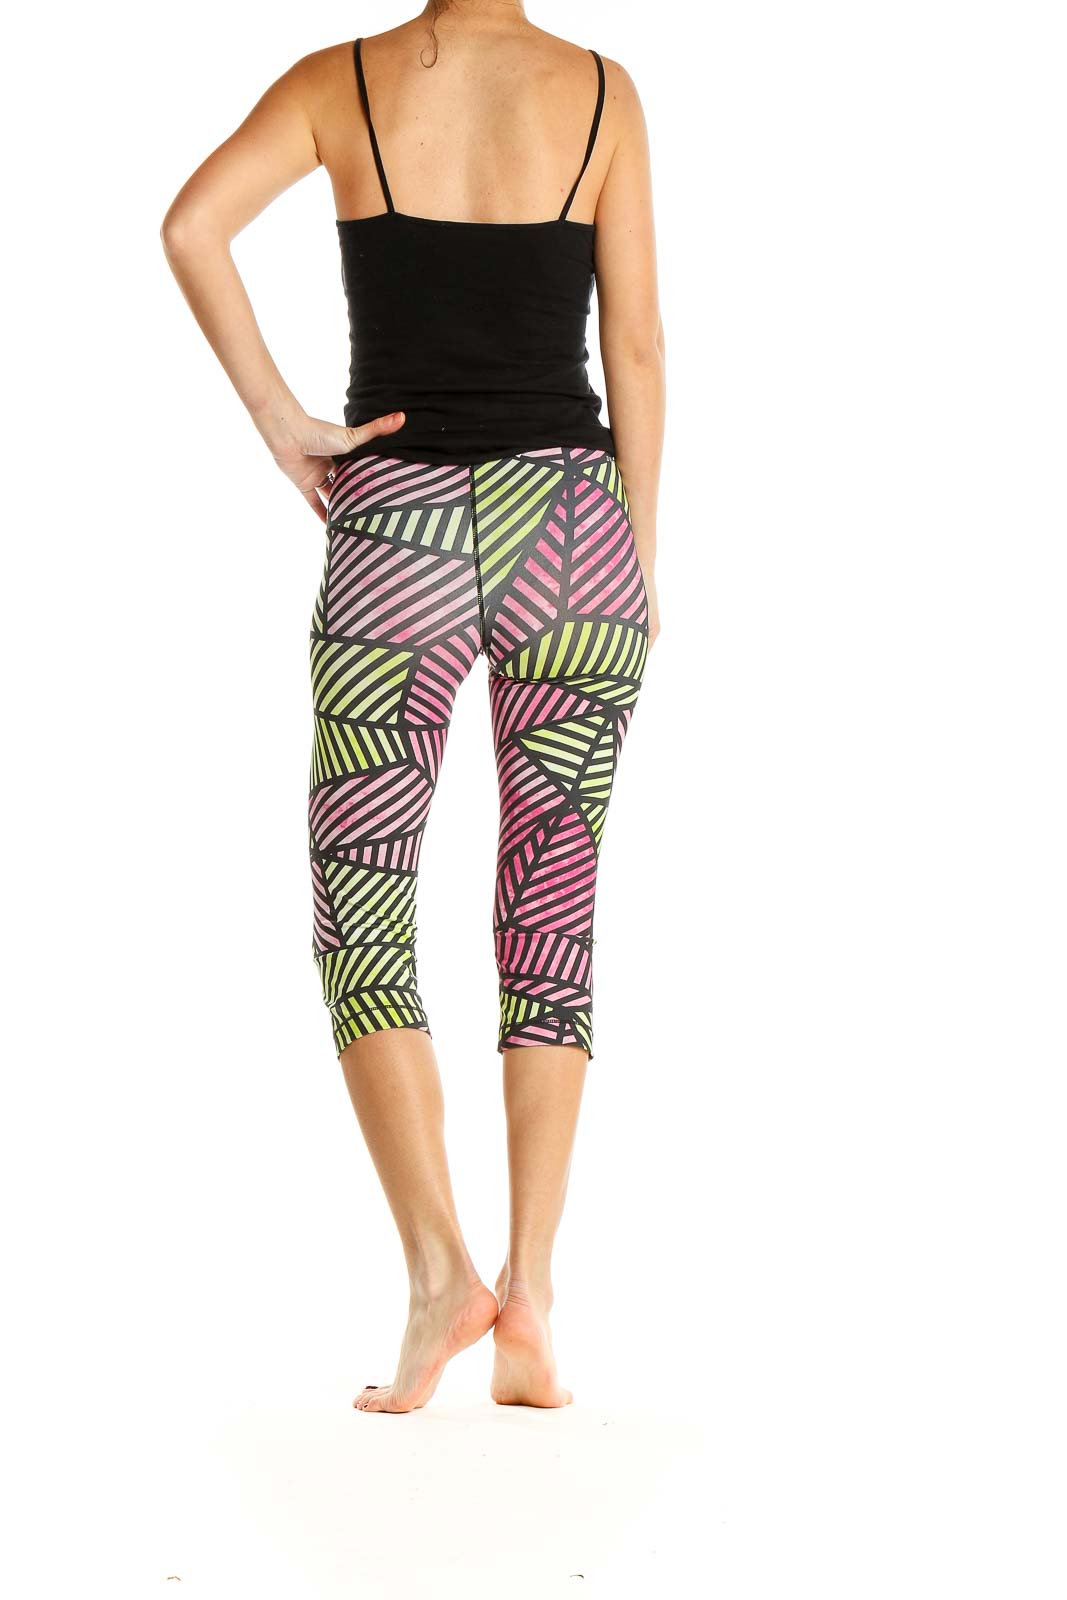 Nike Pro - Pink Green Printed Activewear Cropped Leggings Polyester Spandex